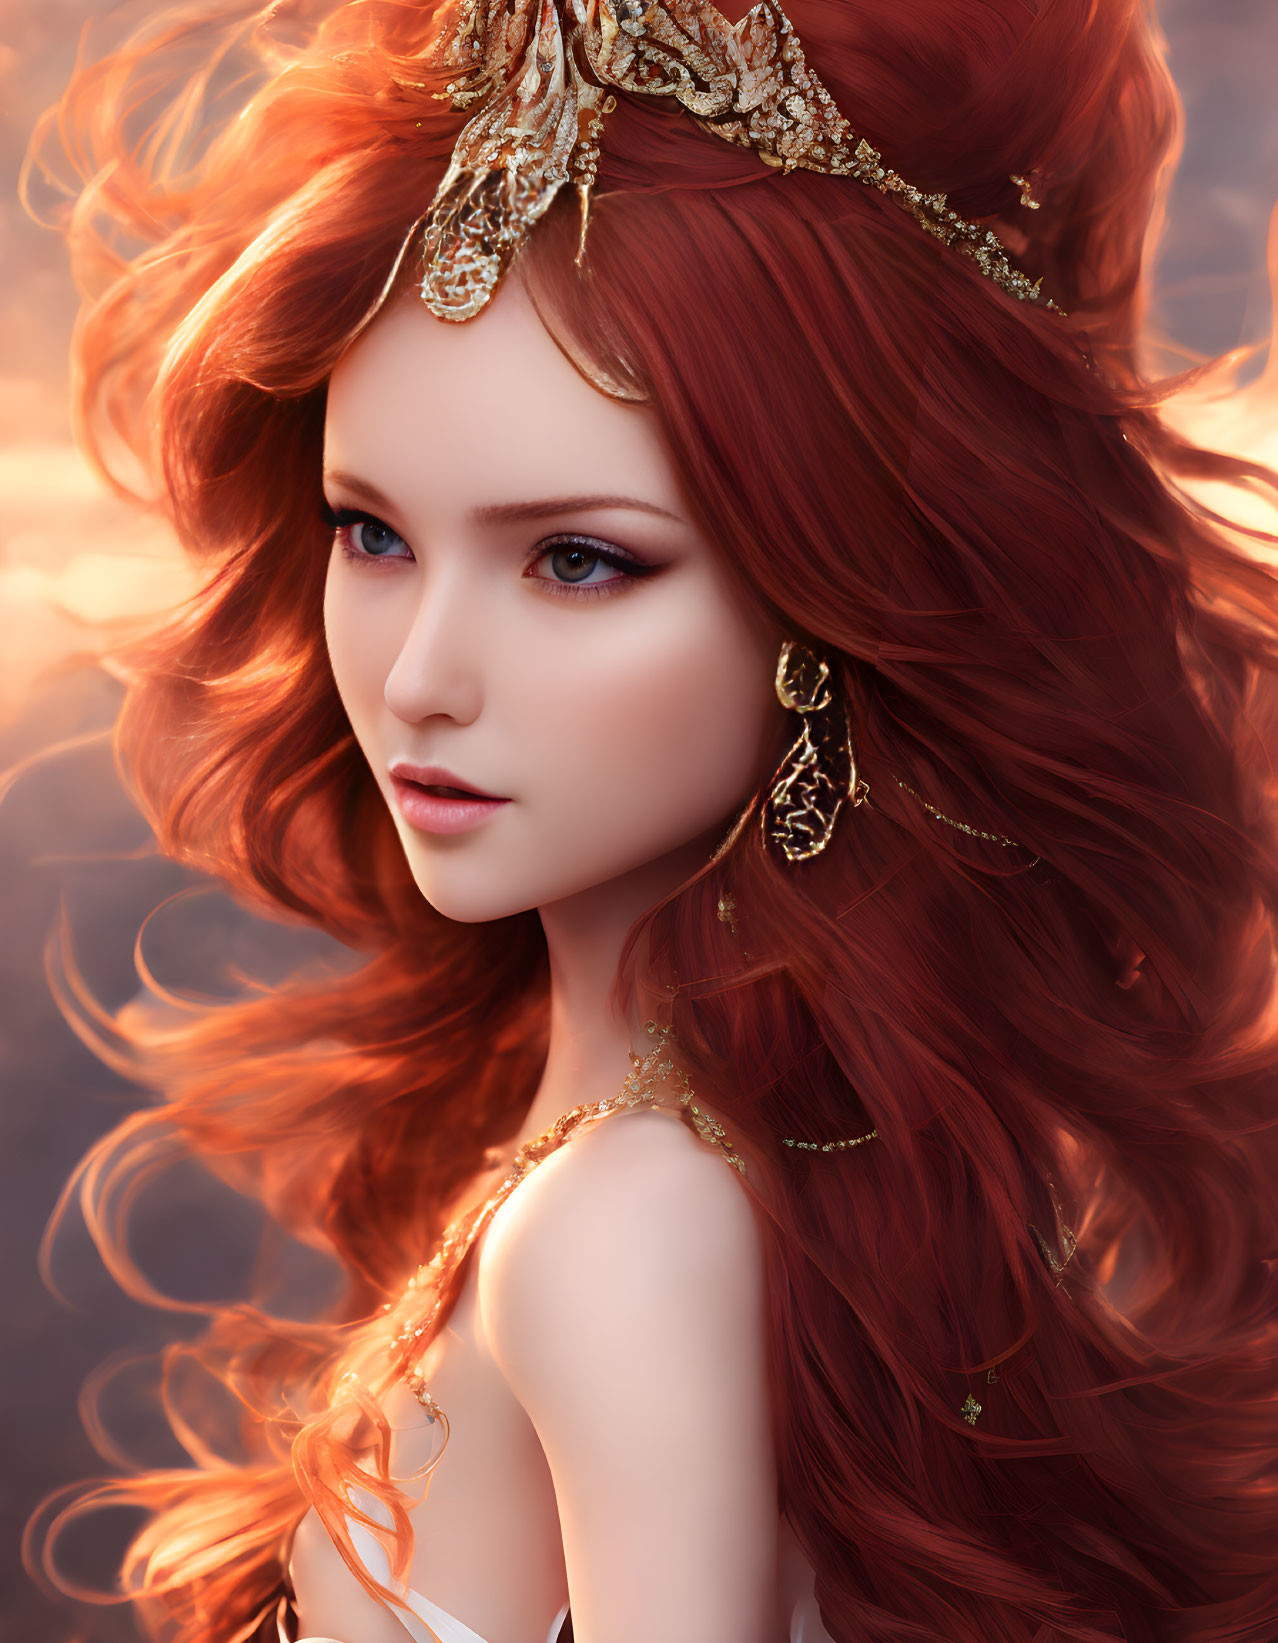 redhead goddess